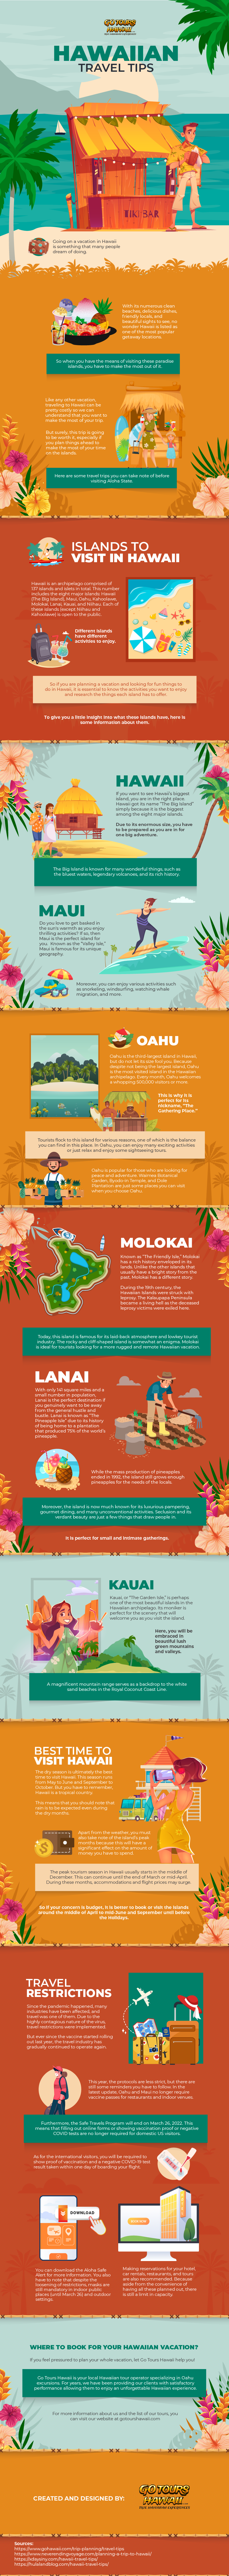 Hawaiian Travel Tips - Infographic ImageDAW45@$